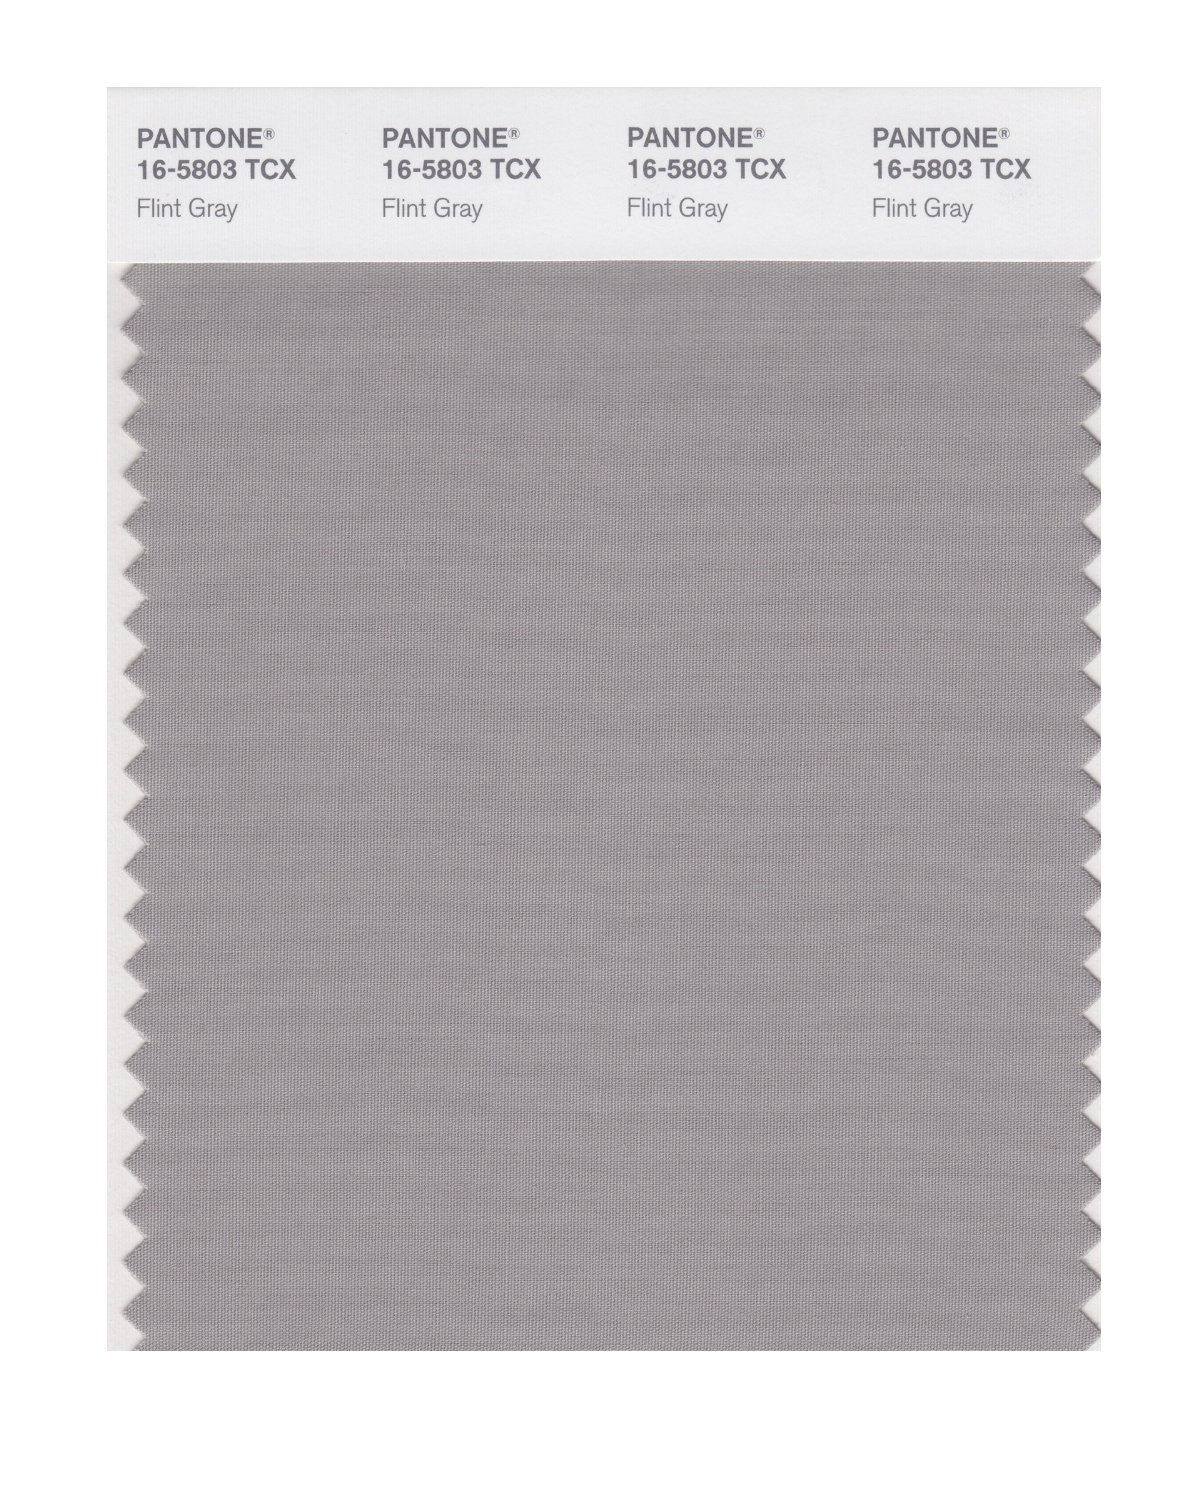 Pantone Cotton Swatch 16-5803 Flint Gray